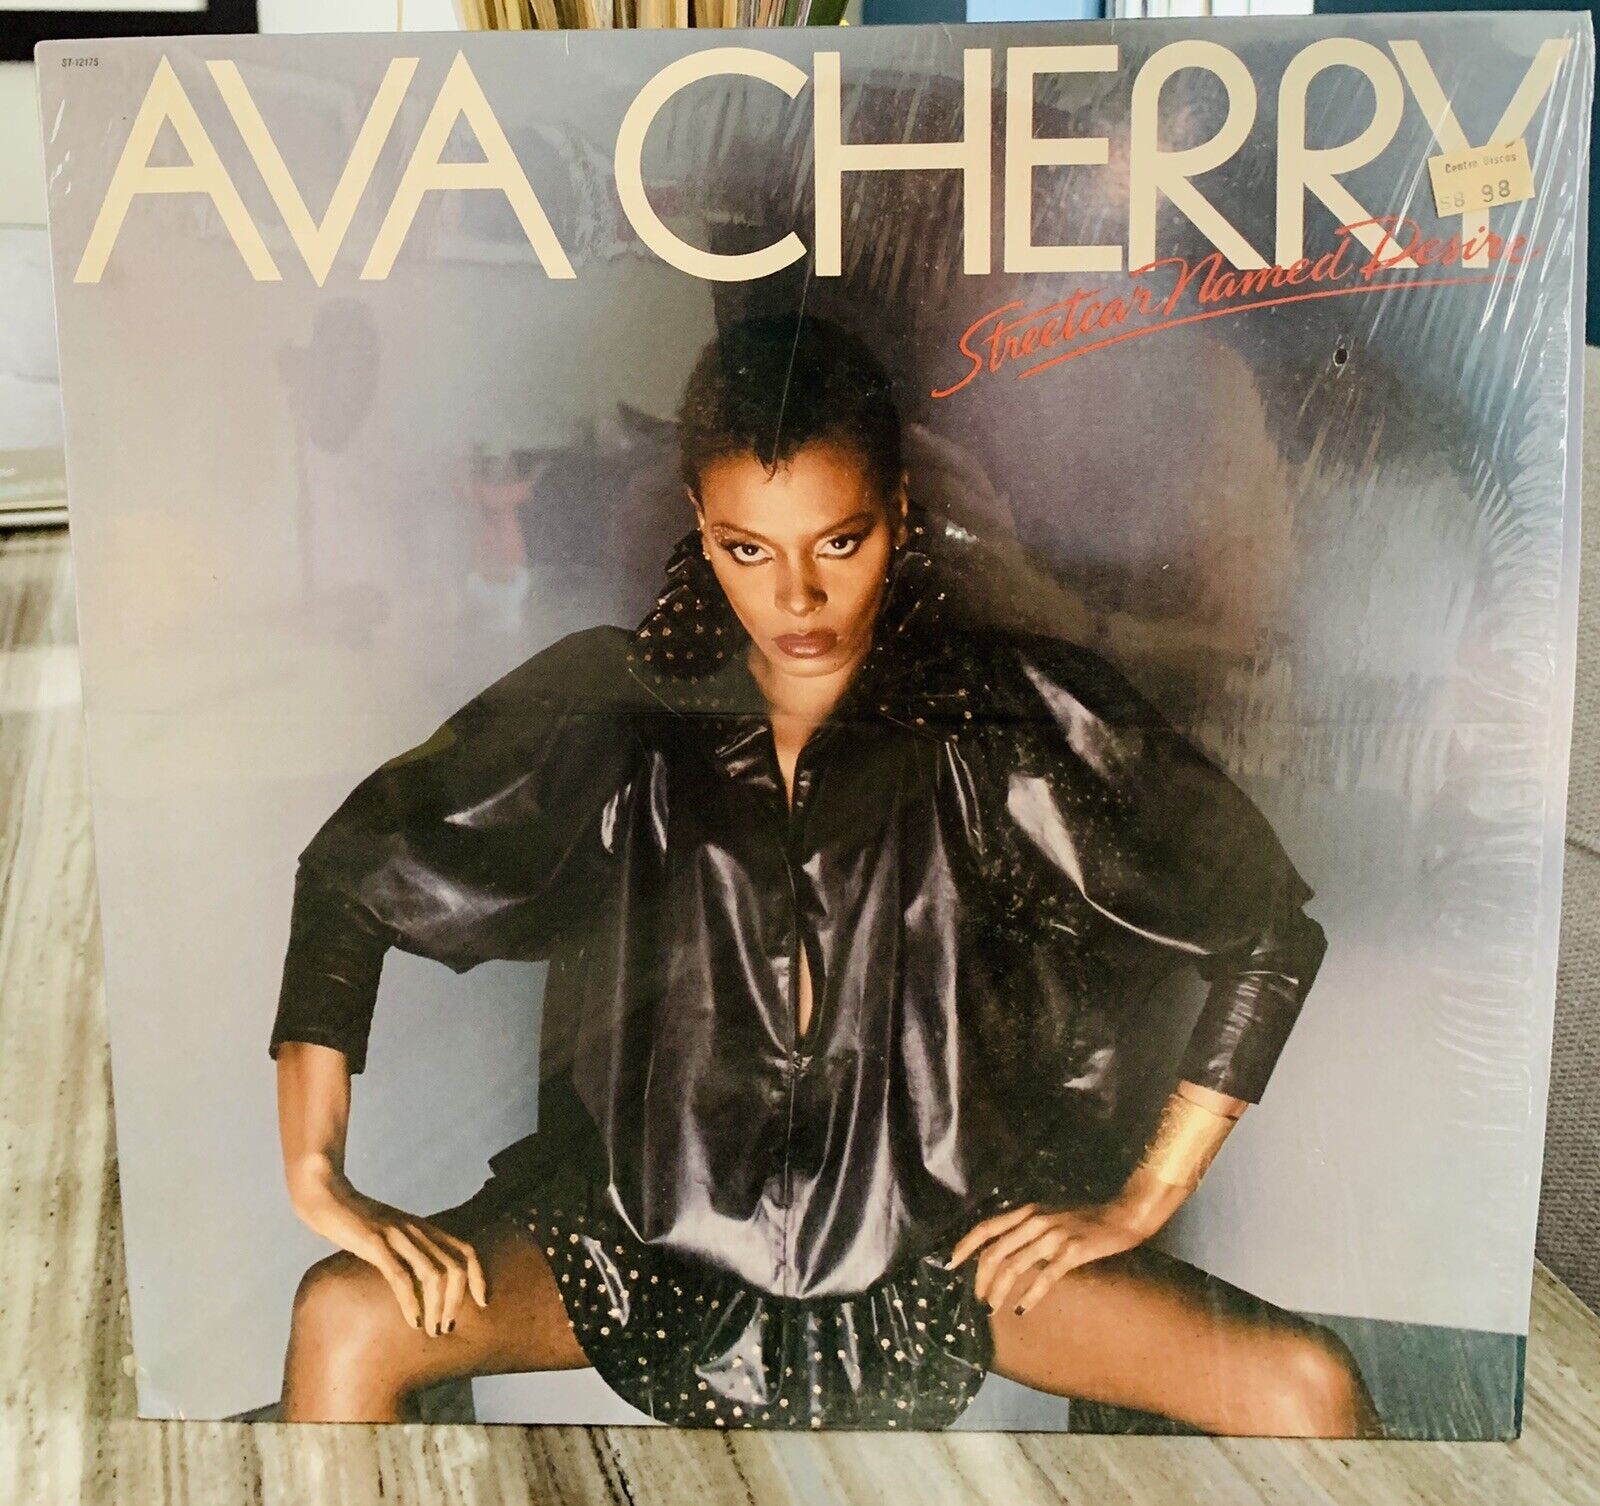 Ava Cherry: Streetcar Named Desire 12” Vinyl